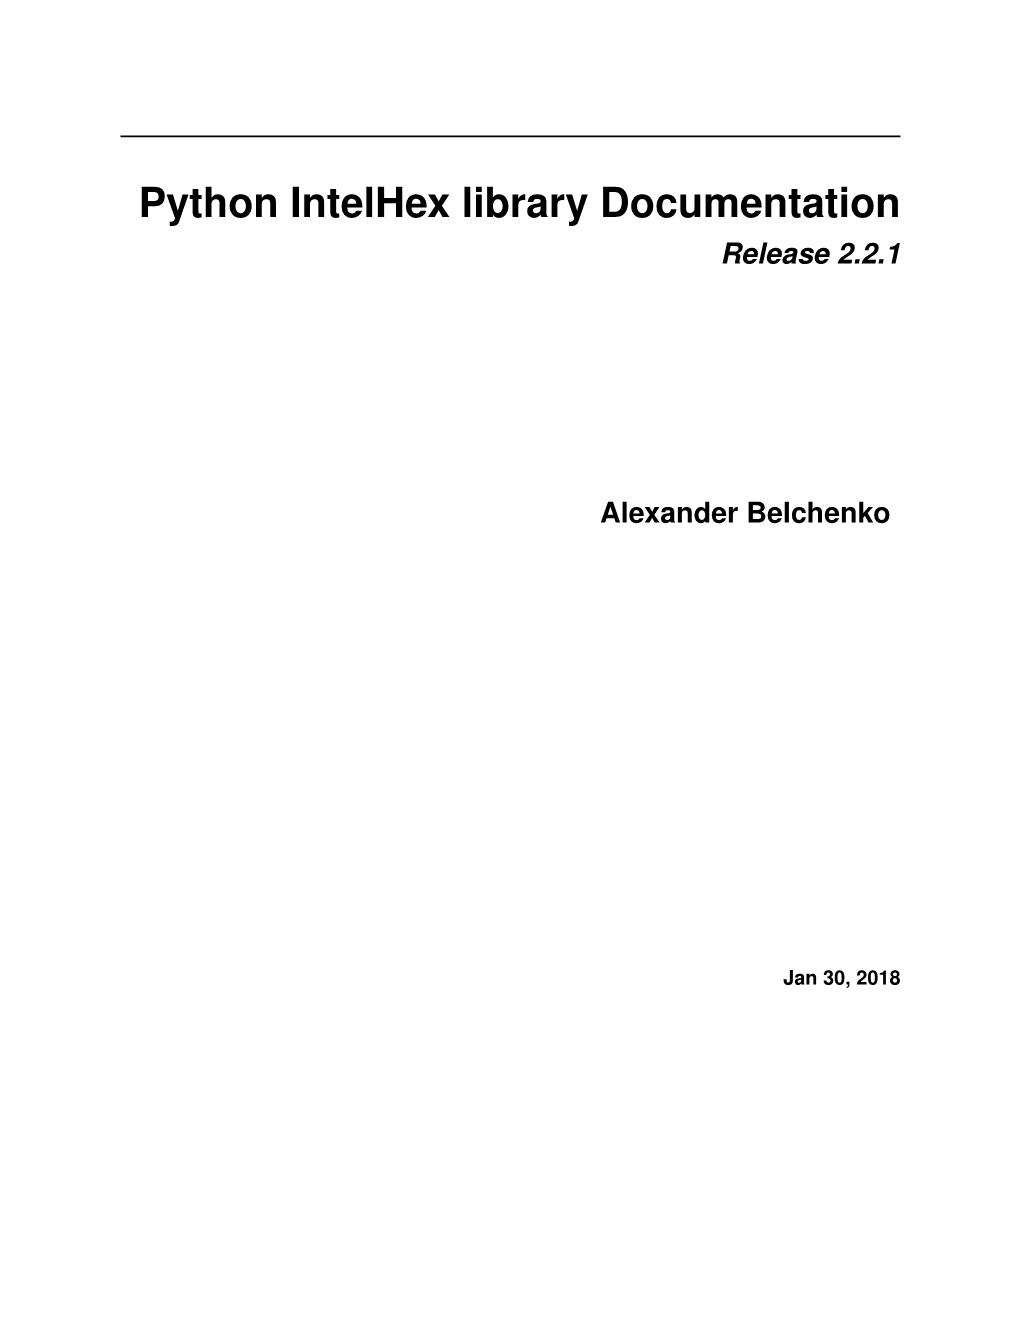 Python Intelhex Library Documentation Release 2.2.1